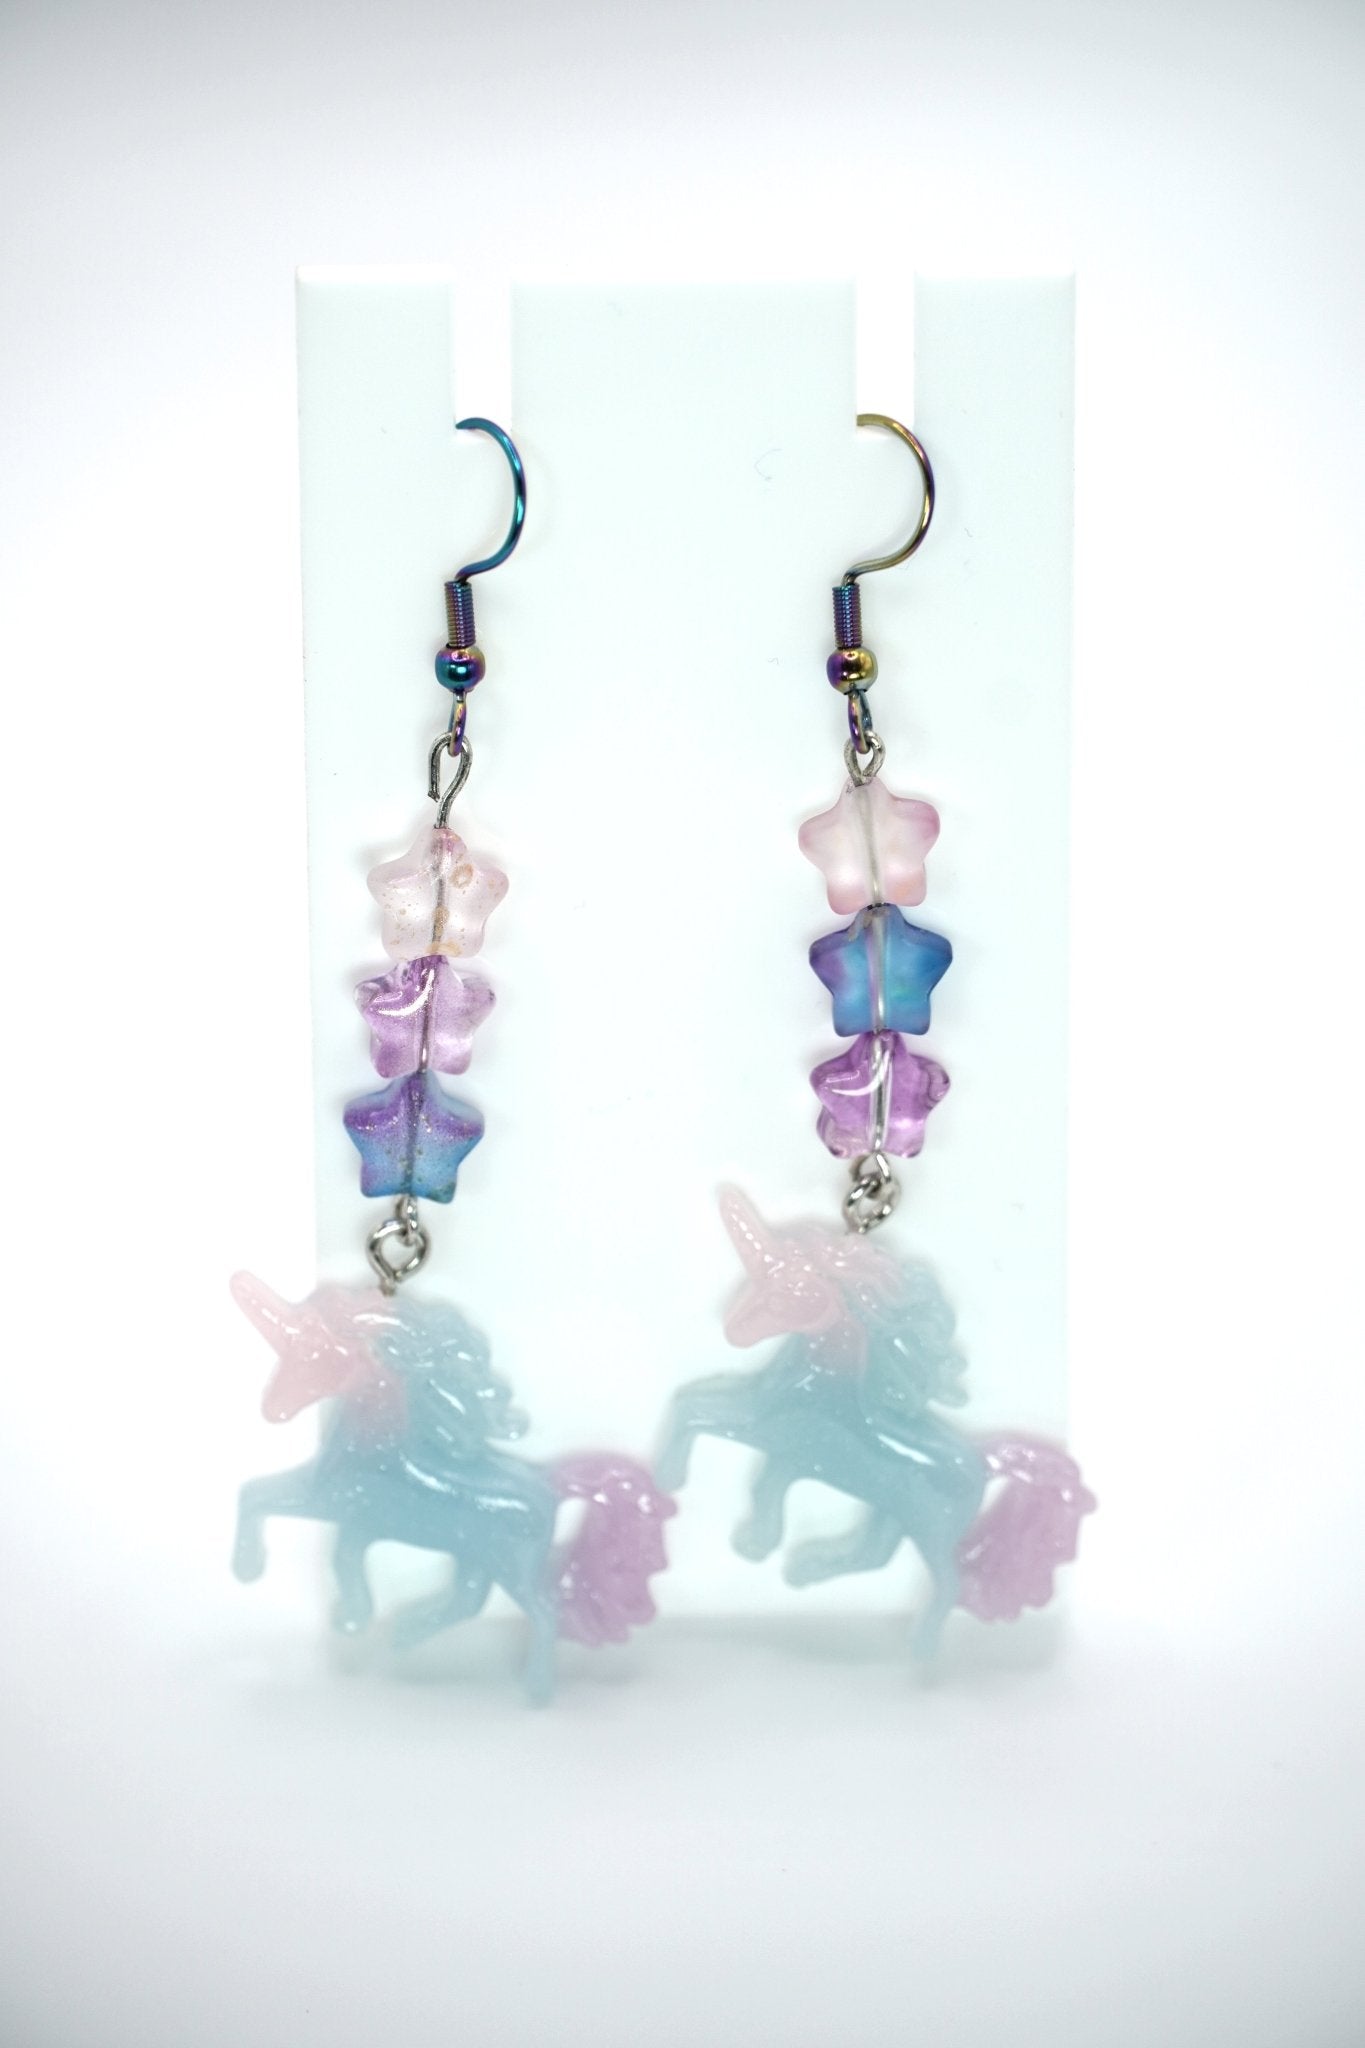 Unicorn Rainbow Earrings with Czech Glass Sunset Beads and Anodized Rainbow Hooks, Lightweight Fairycore Drop Earrings - Dekowaii Jewelry Company